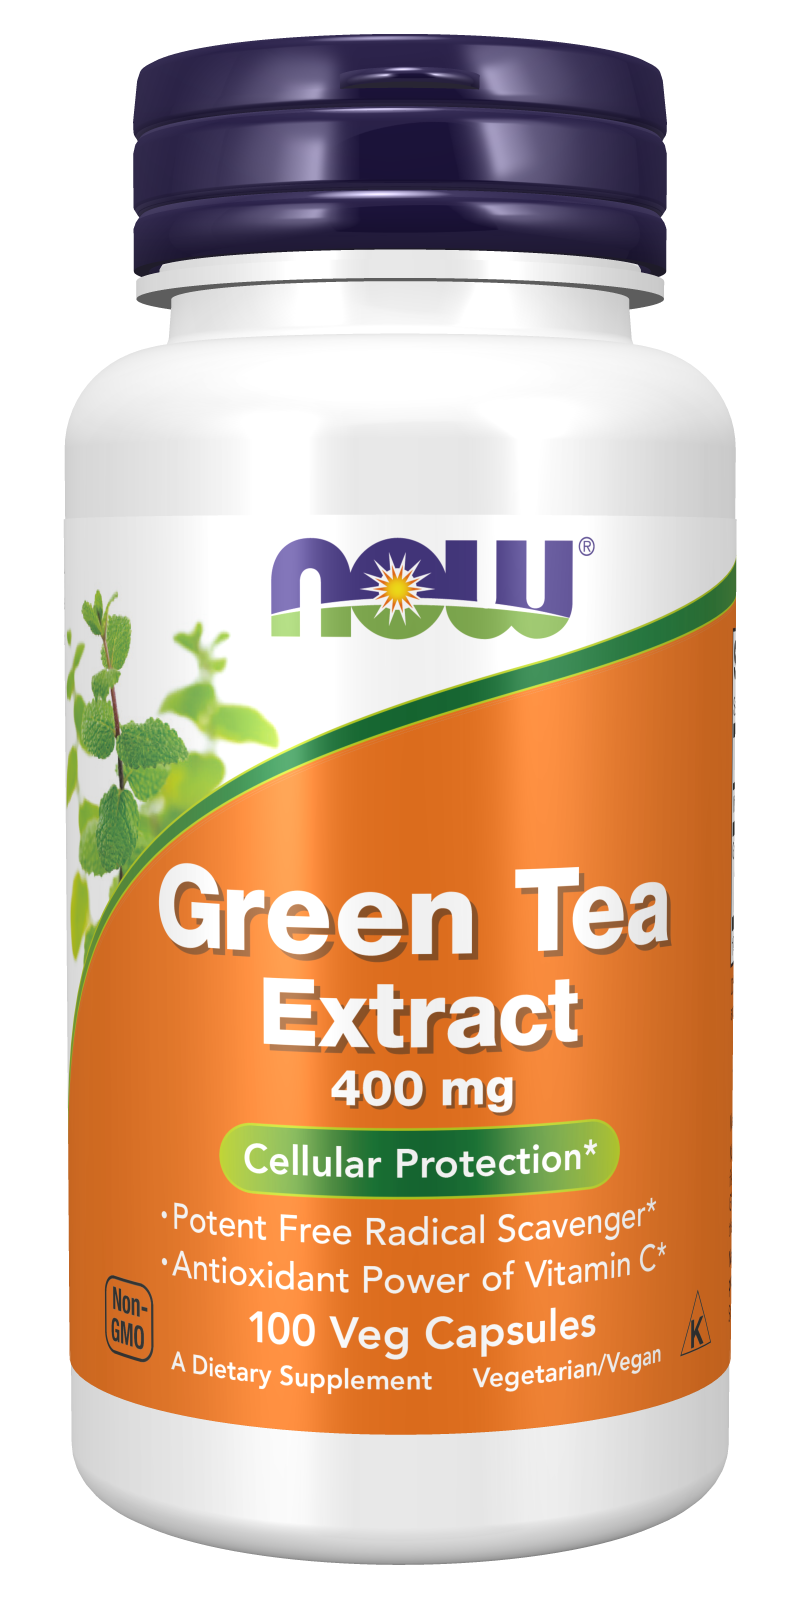 Green Tea Extract 400 mg - 100 Veg Capsules Bottle Front